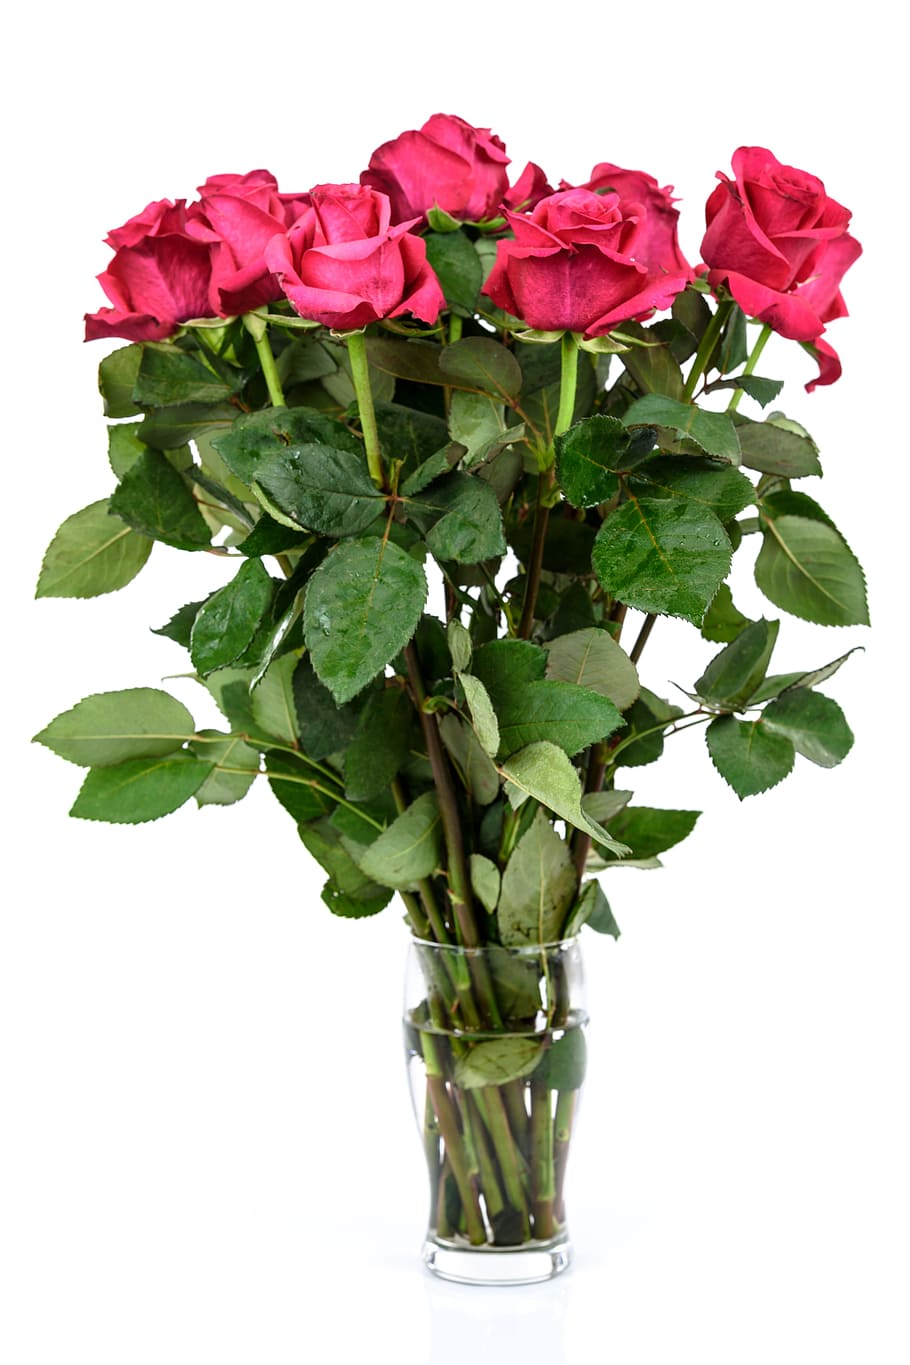 red, roses, glass vase, red roses, glass, vase, flower, gift, love, beauty